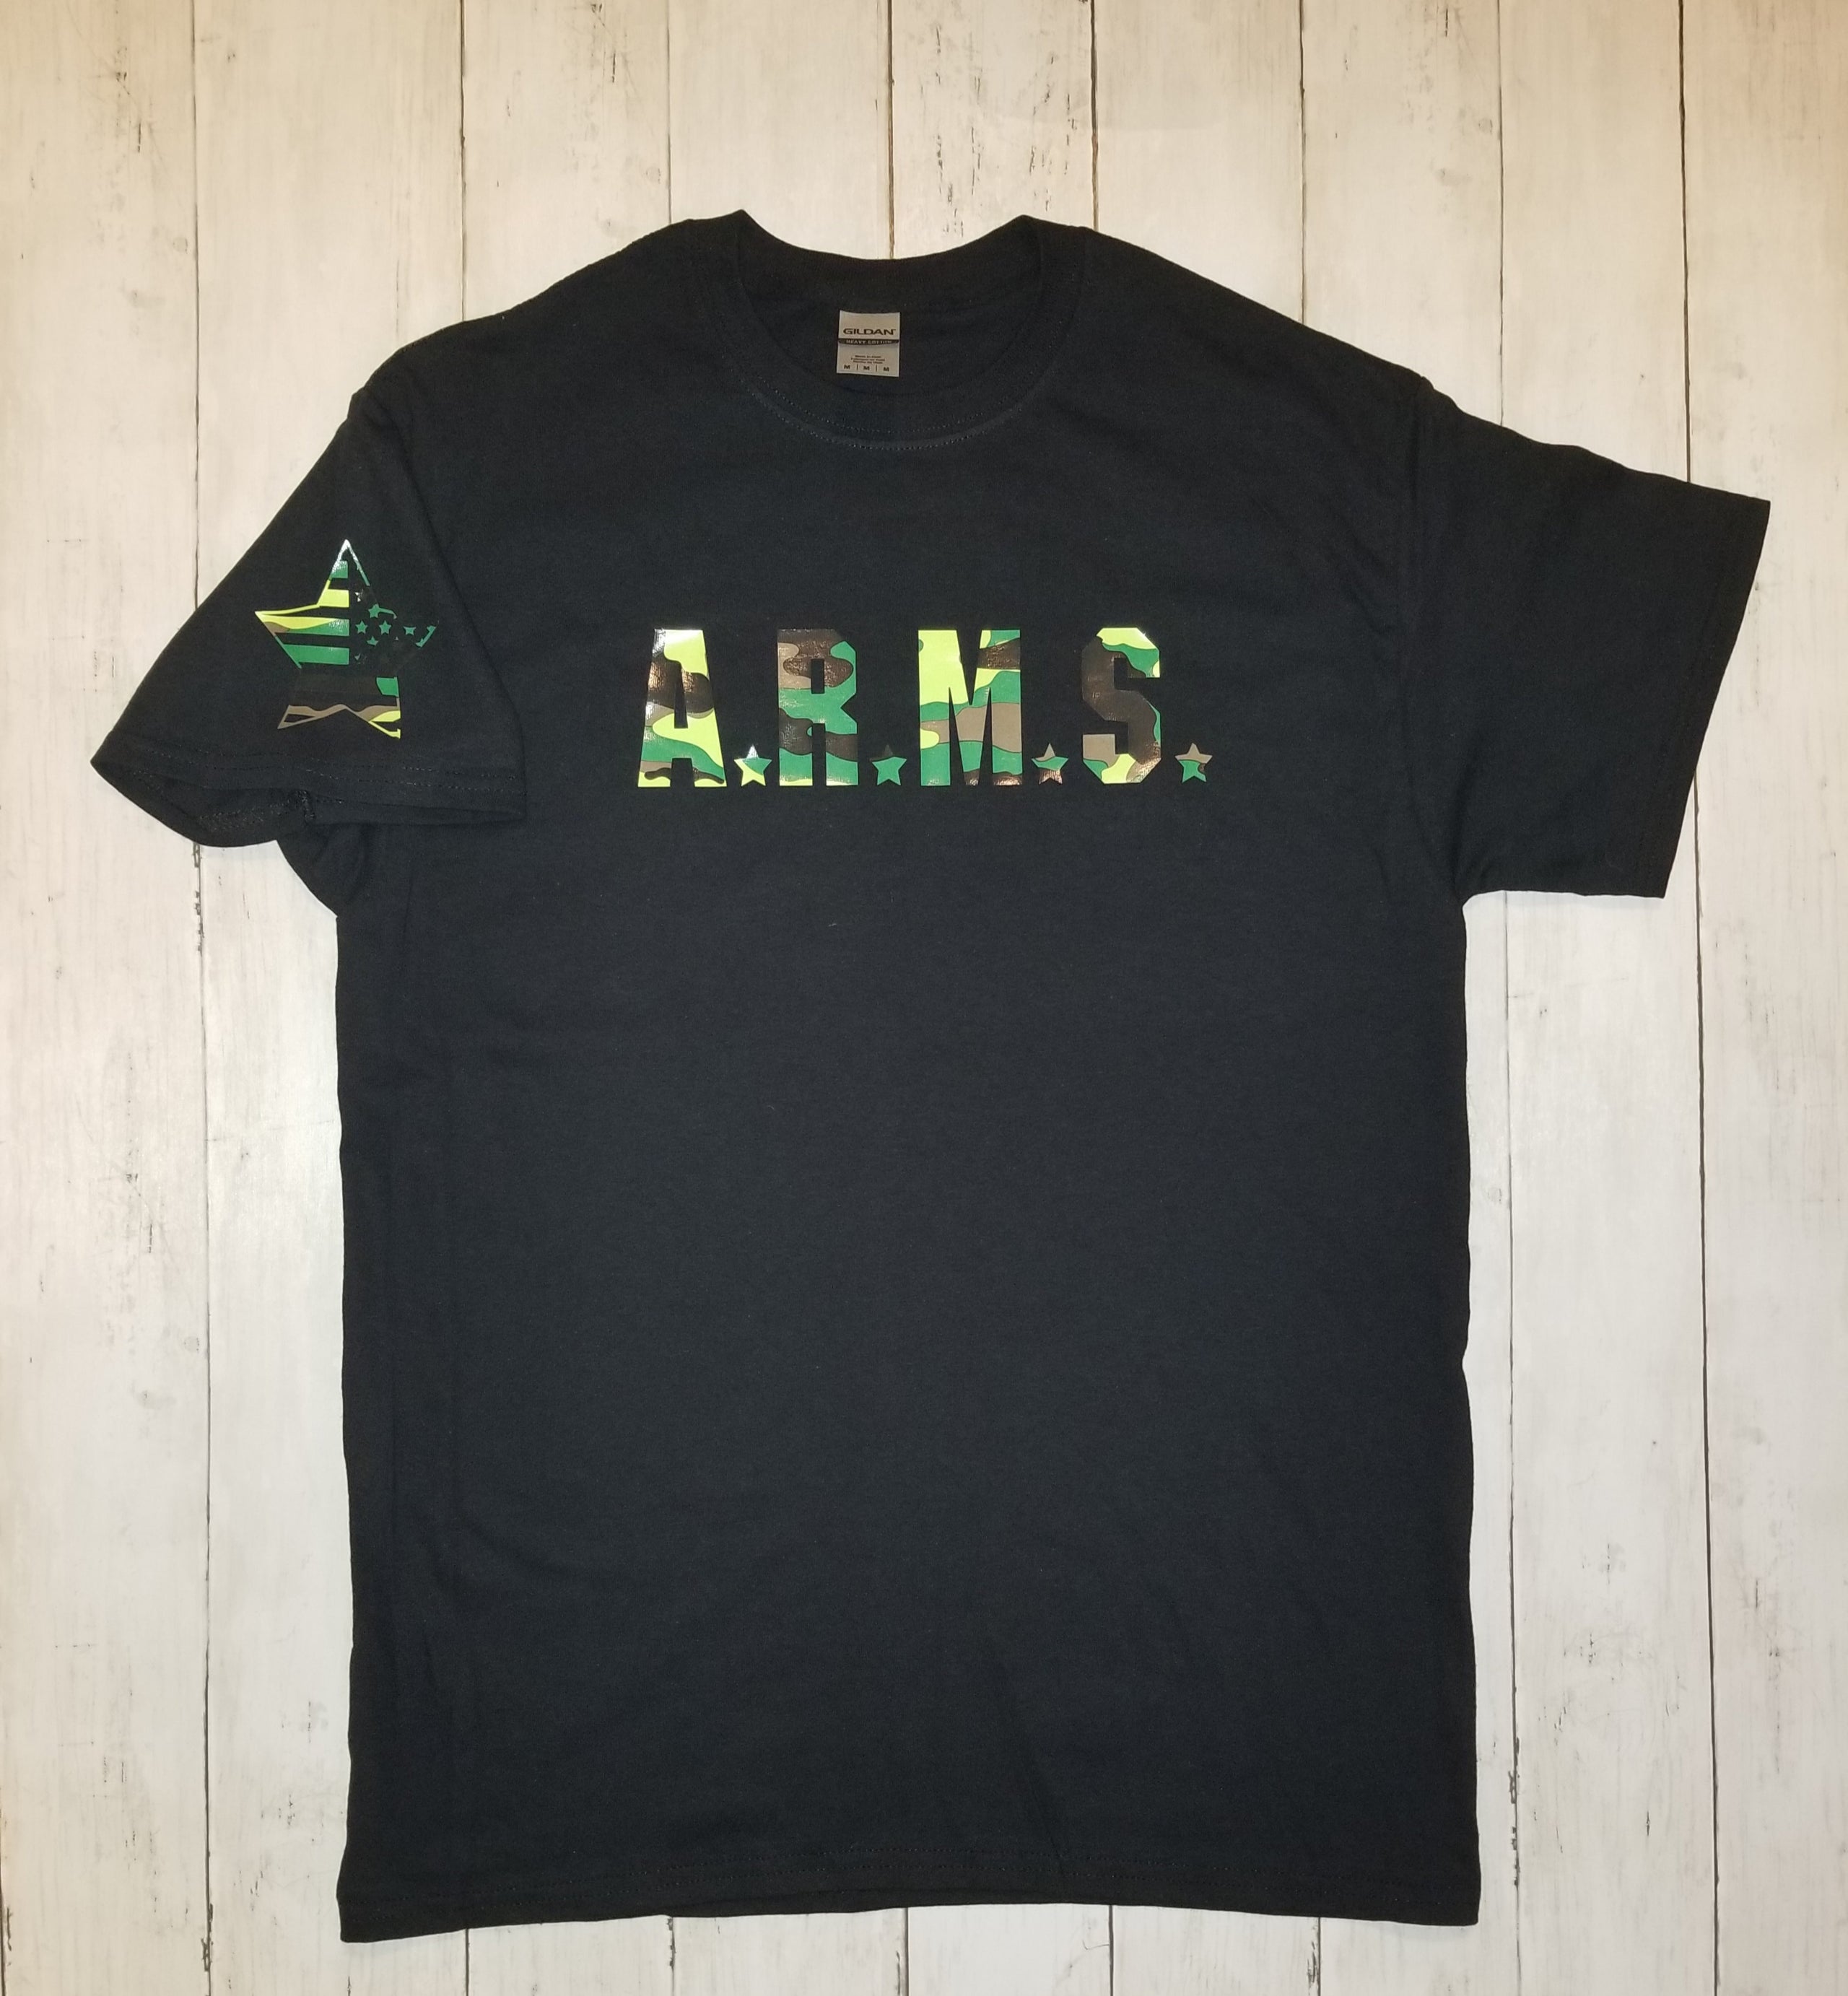 OFCL Signature Camo Green T-Shirt